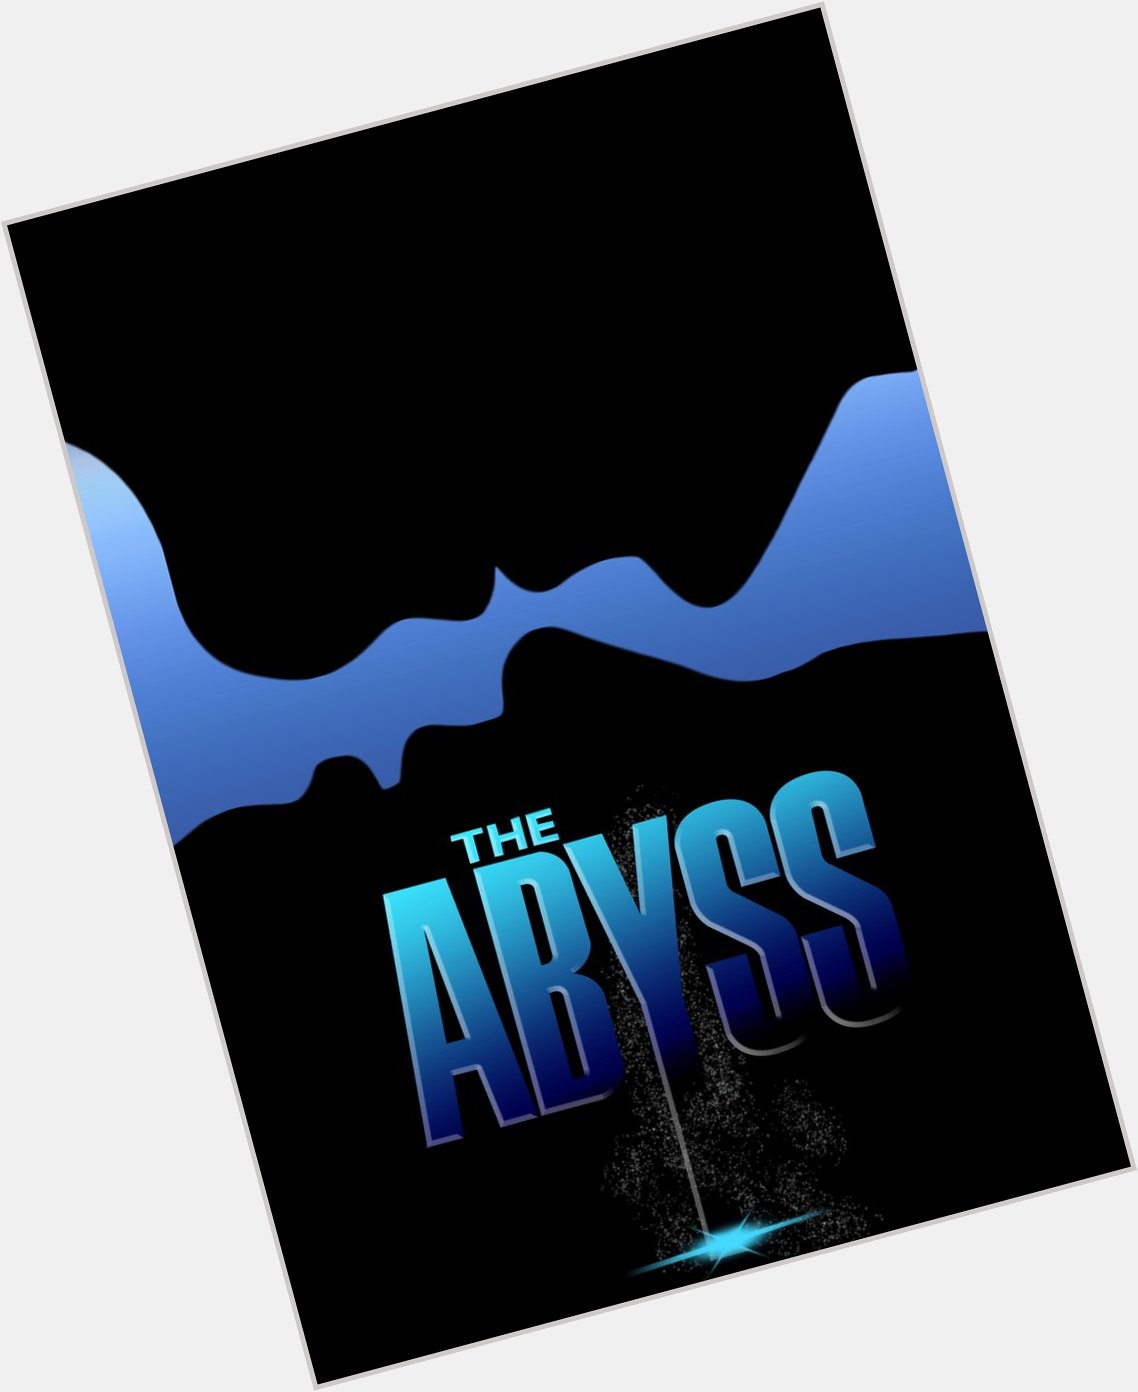 The Abyss  (1989)
Happy Birthday, Ed Harris! 